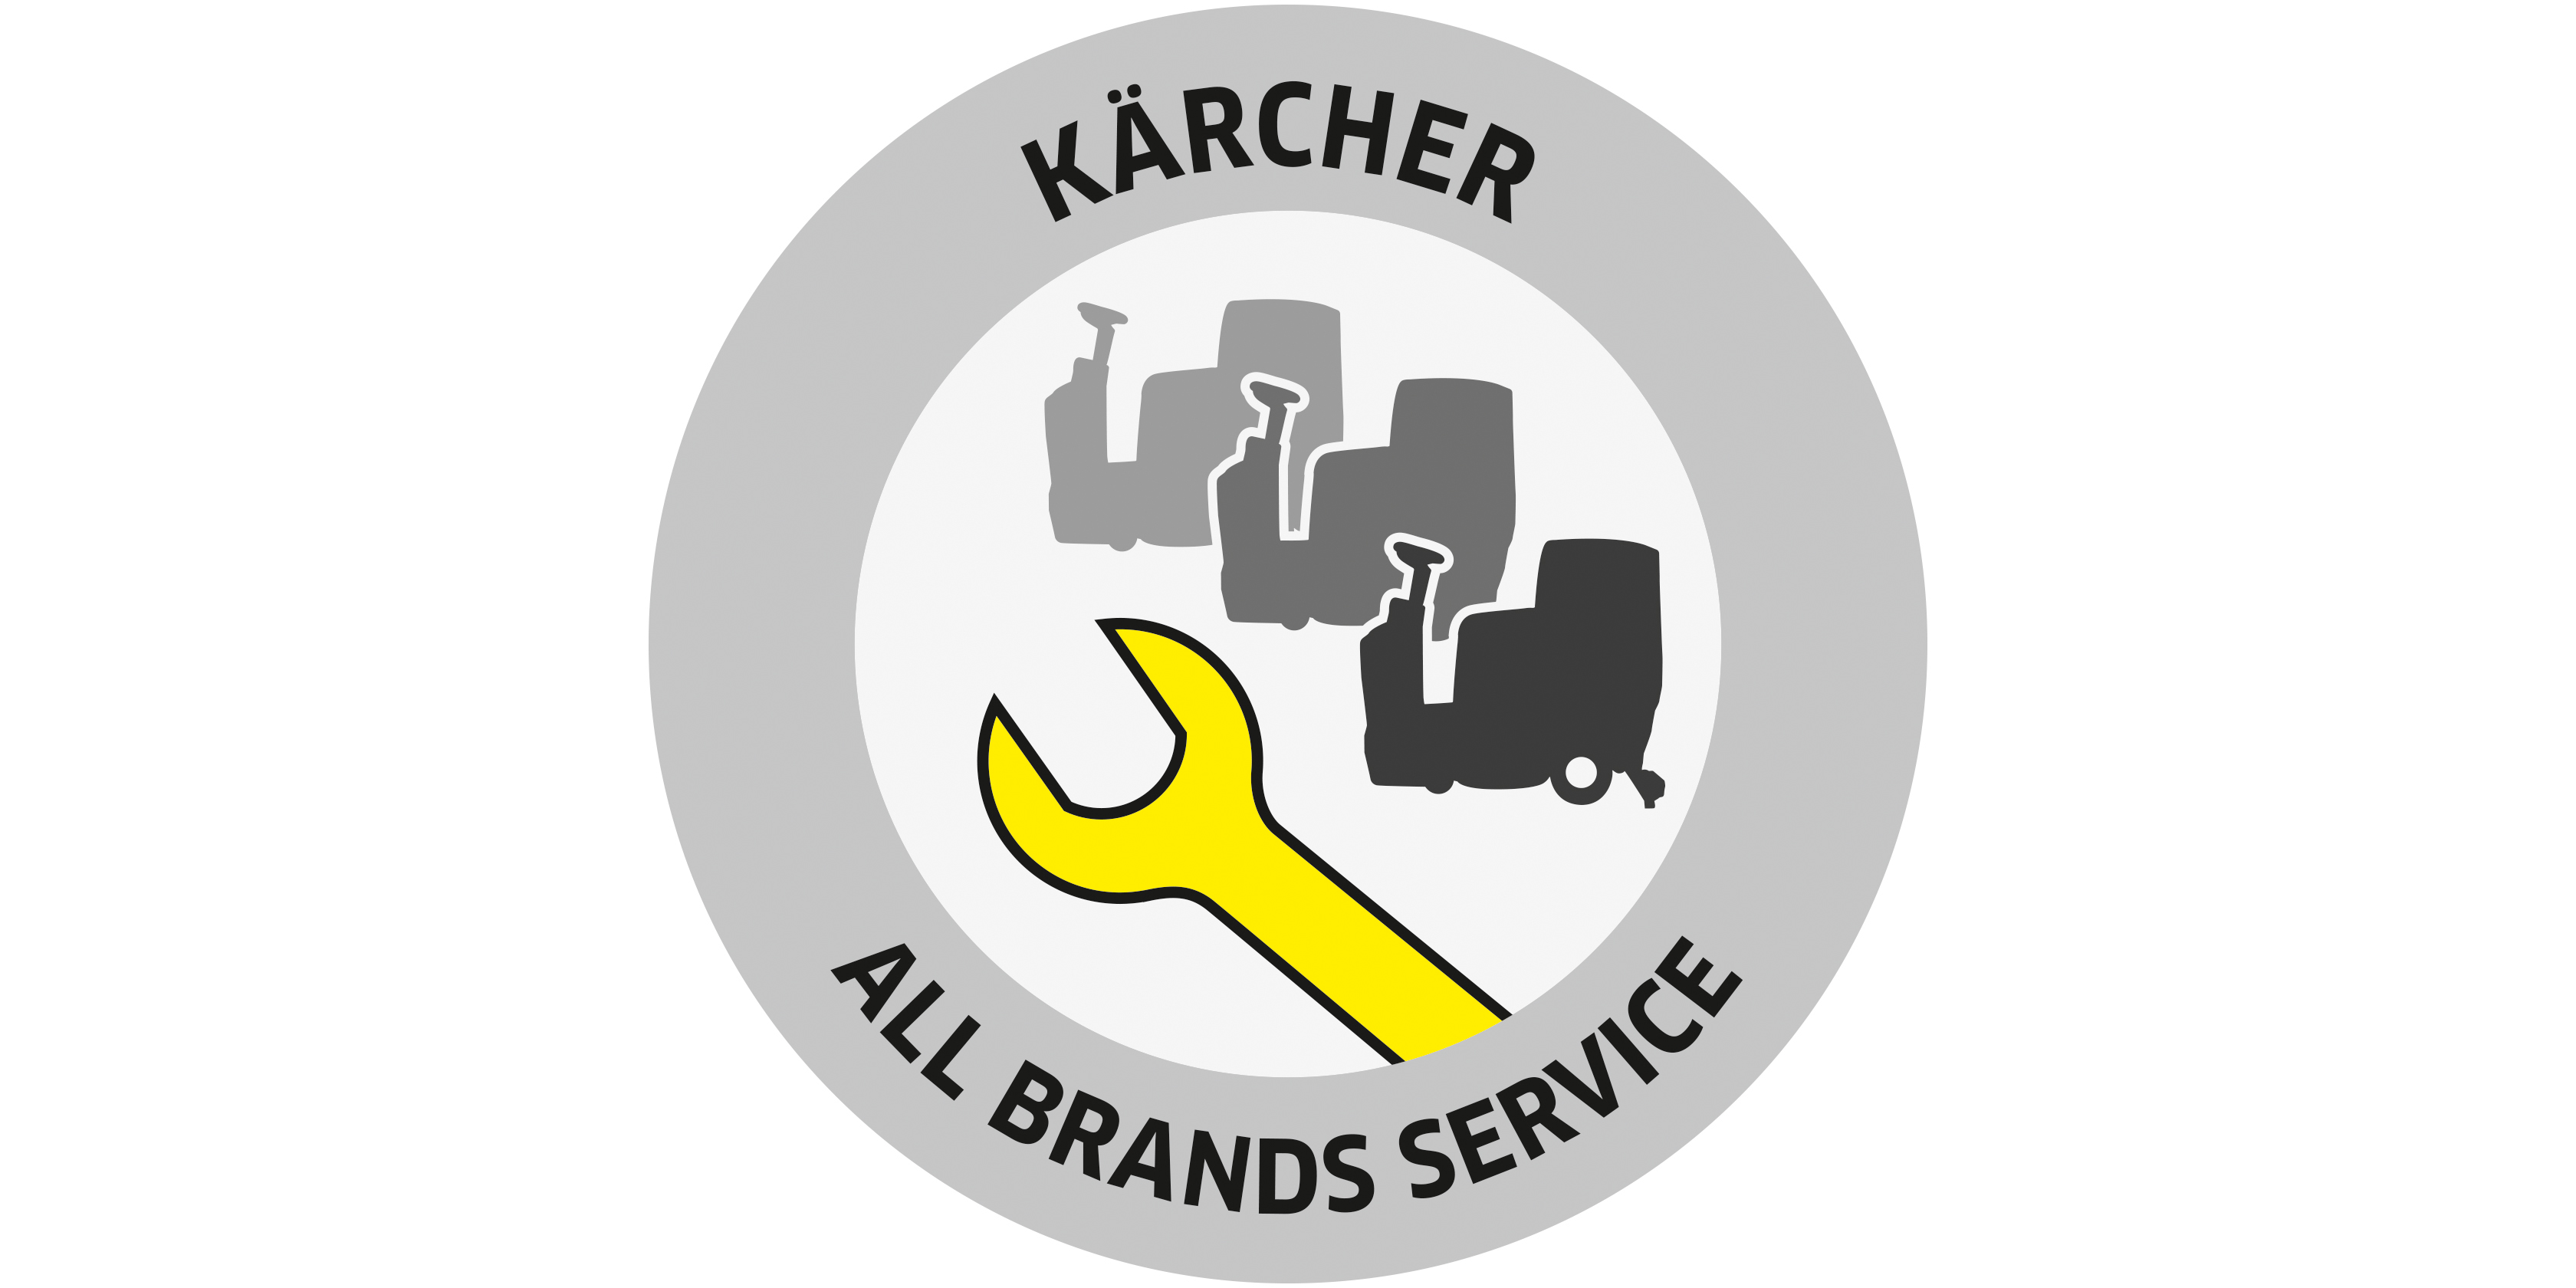 All Brands Service